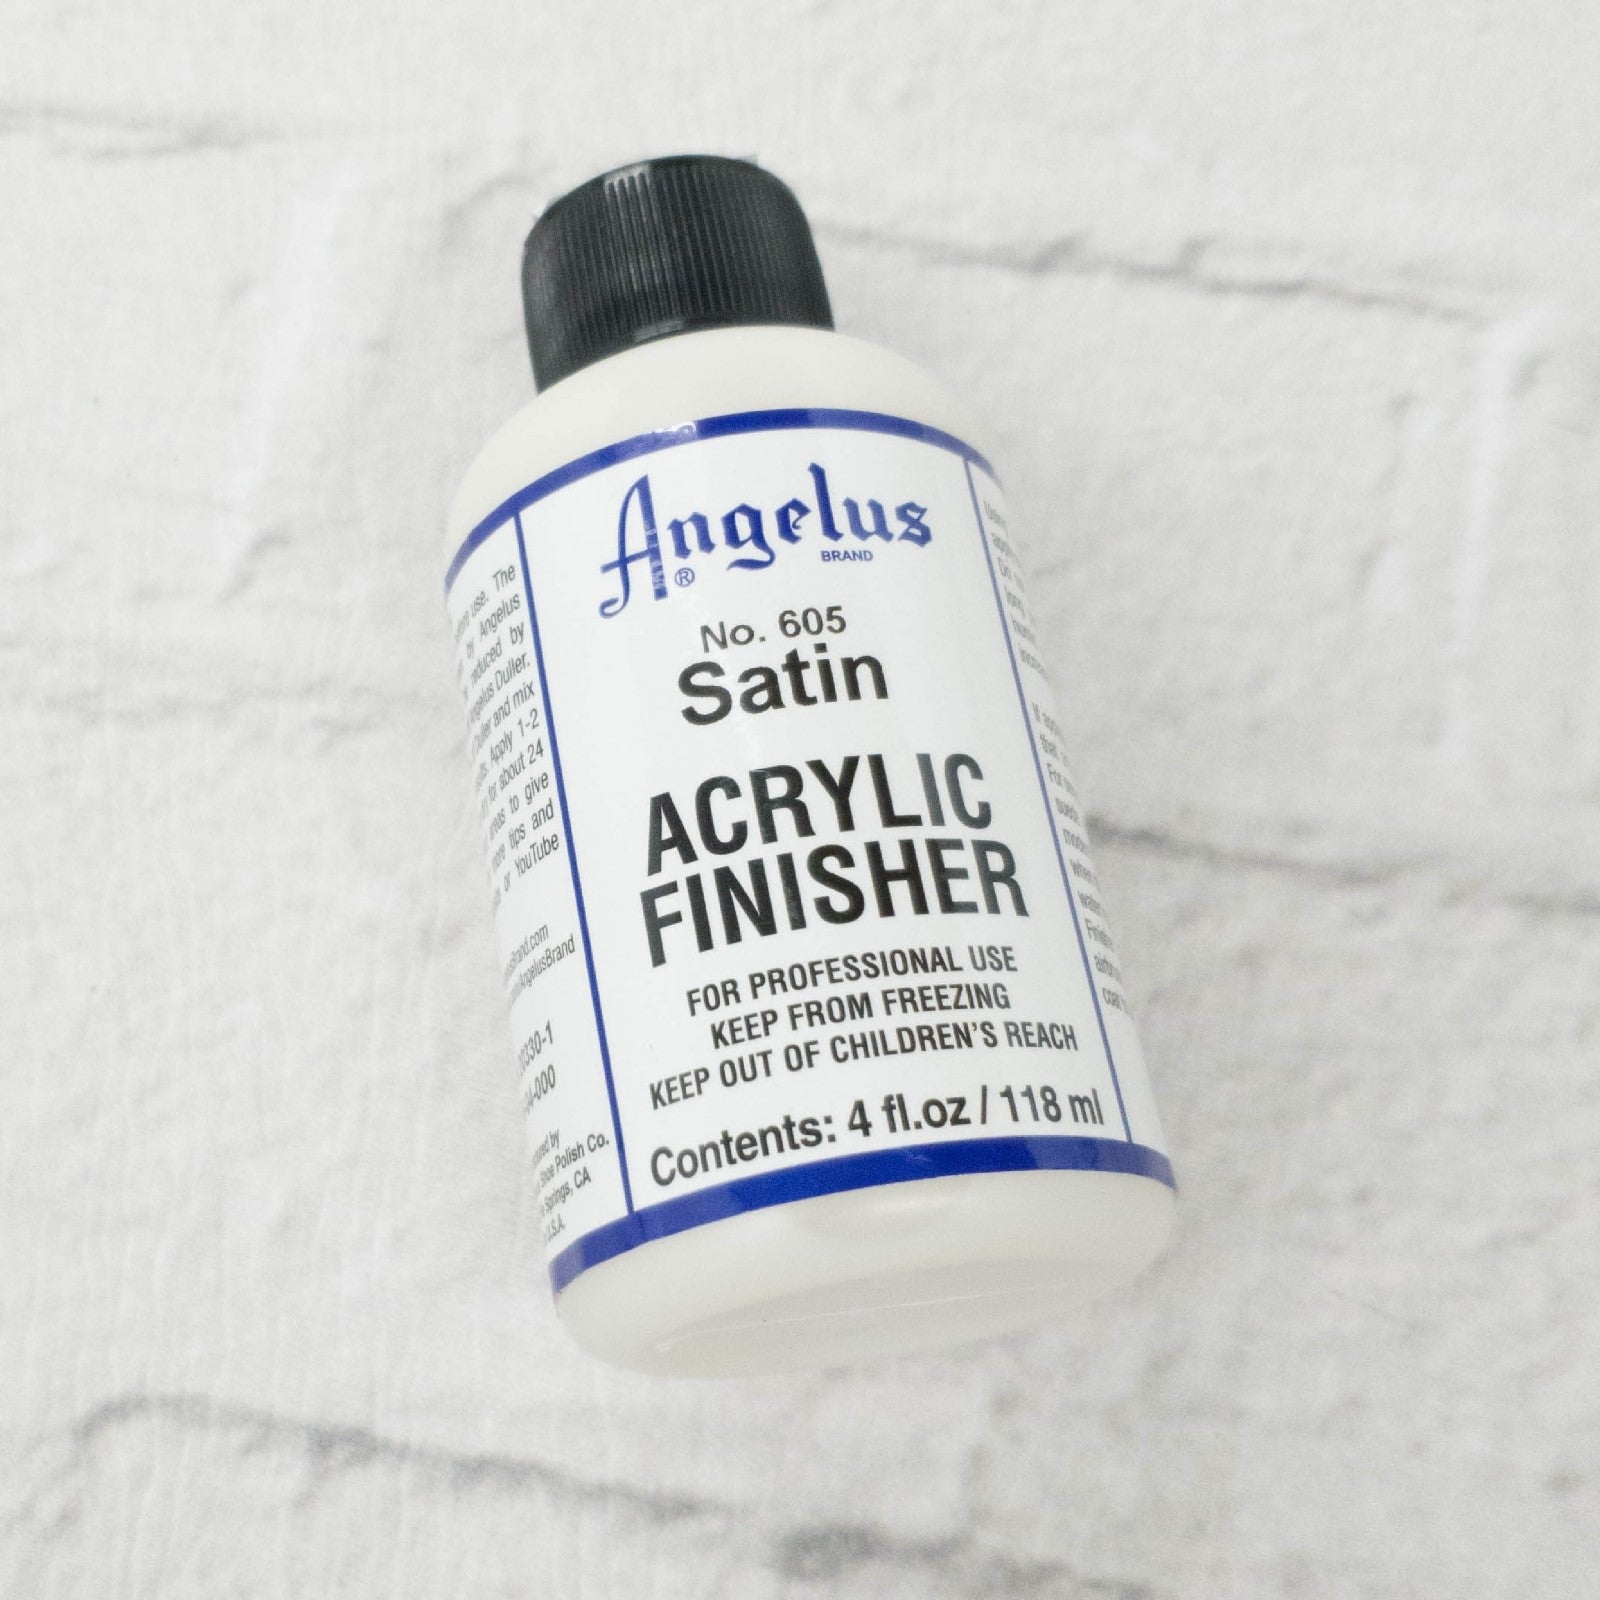 Angelus Acrylic Finisher High Gloss 4 Oz (#ANAFHG)